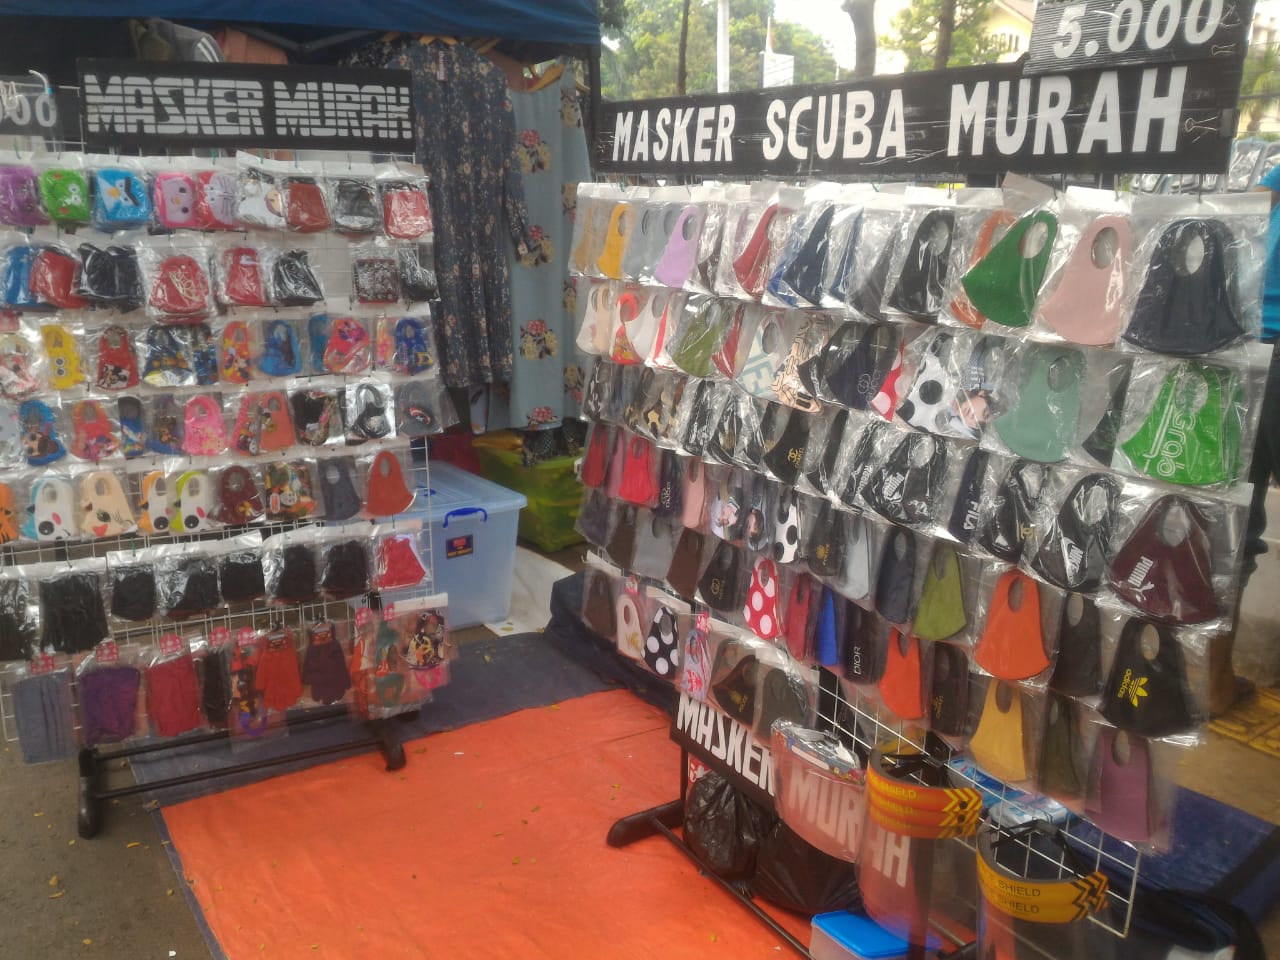 Menjual masker di daerah Jakarta Pusat (Juli 2020) stok barang lebih banyak dibandingkan bulan Mei